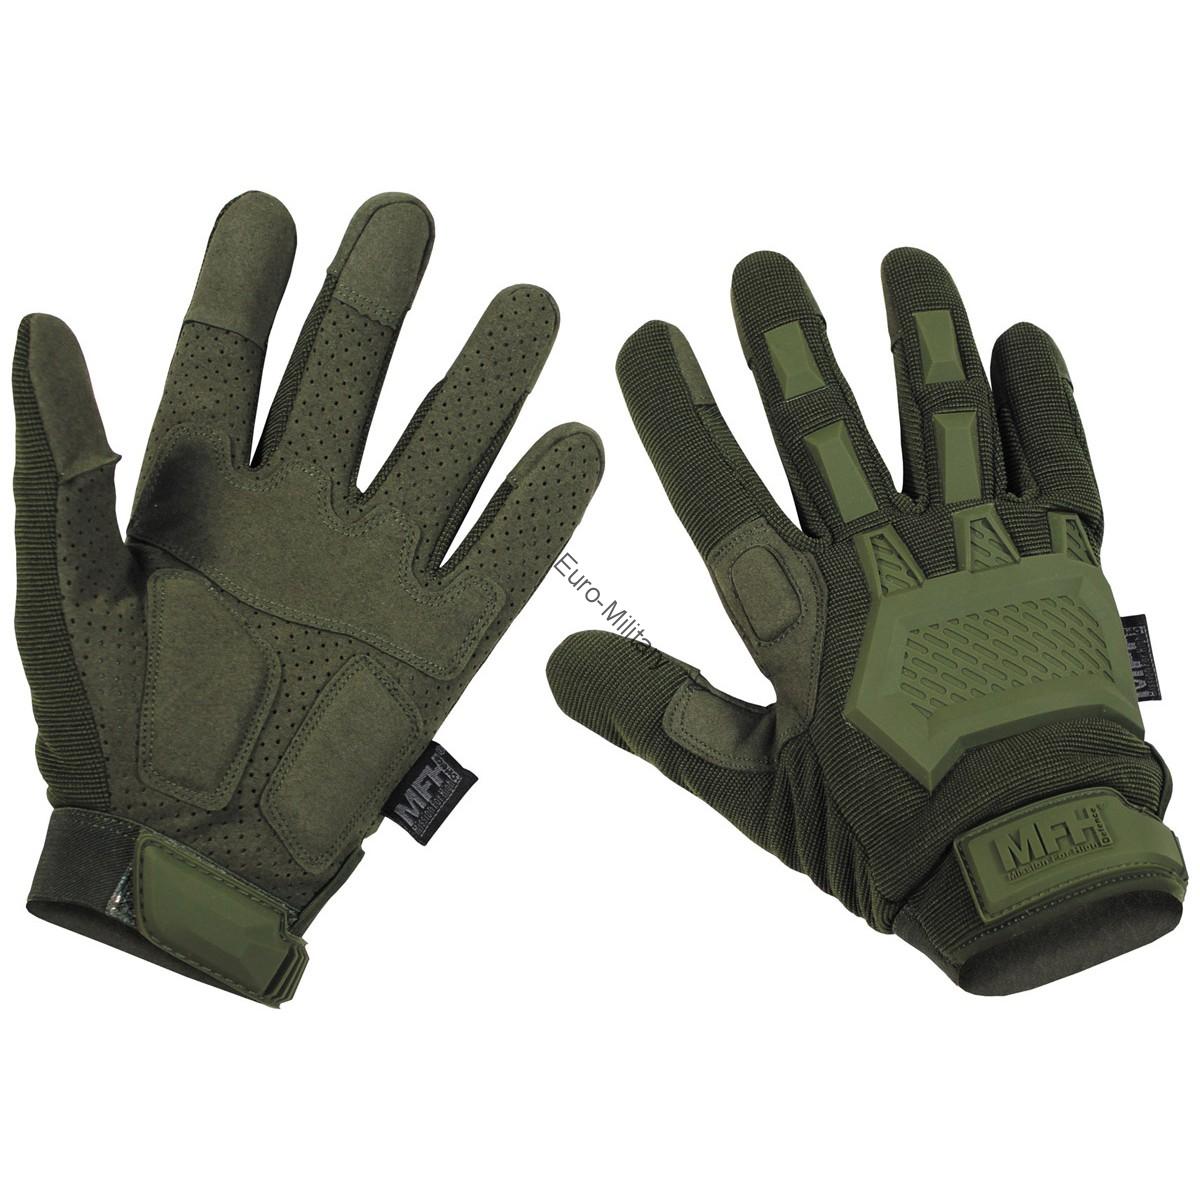 Tactical Military Shooting Profi Gloves - OD Green